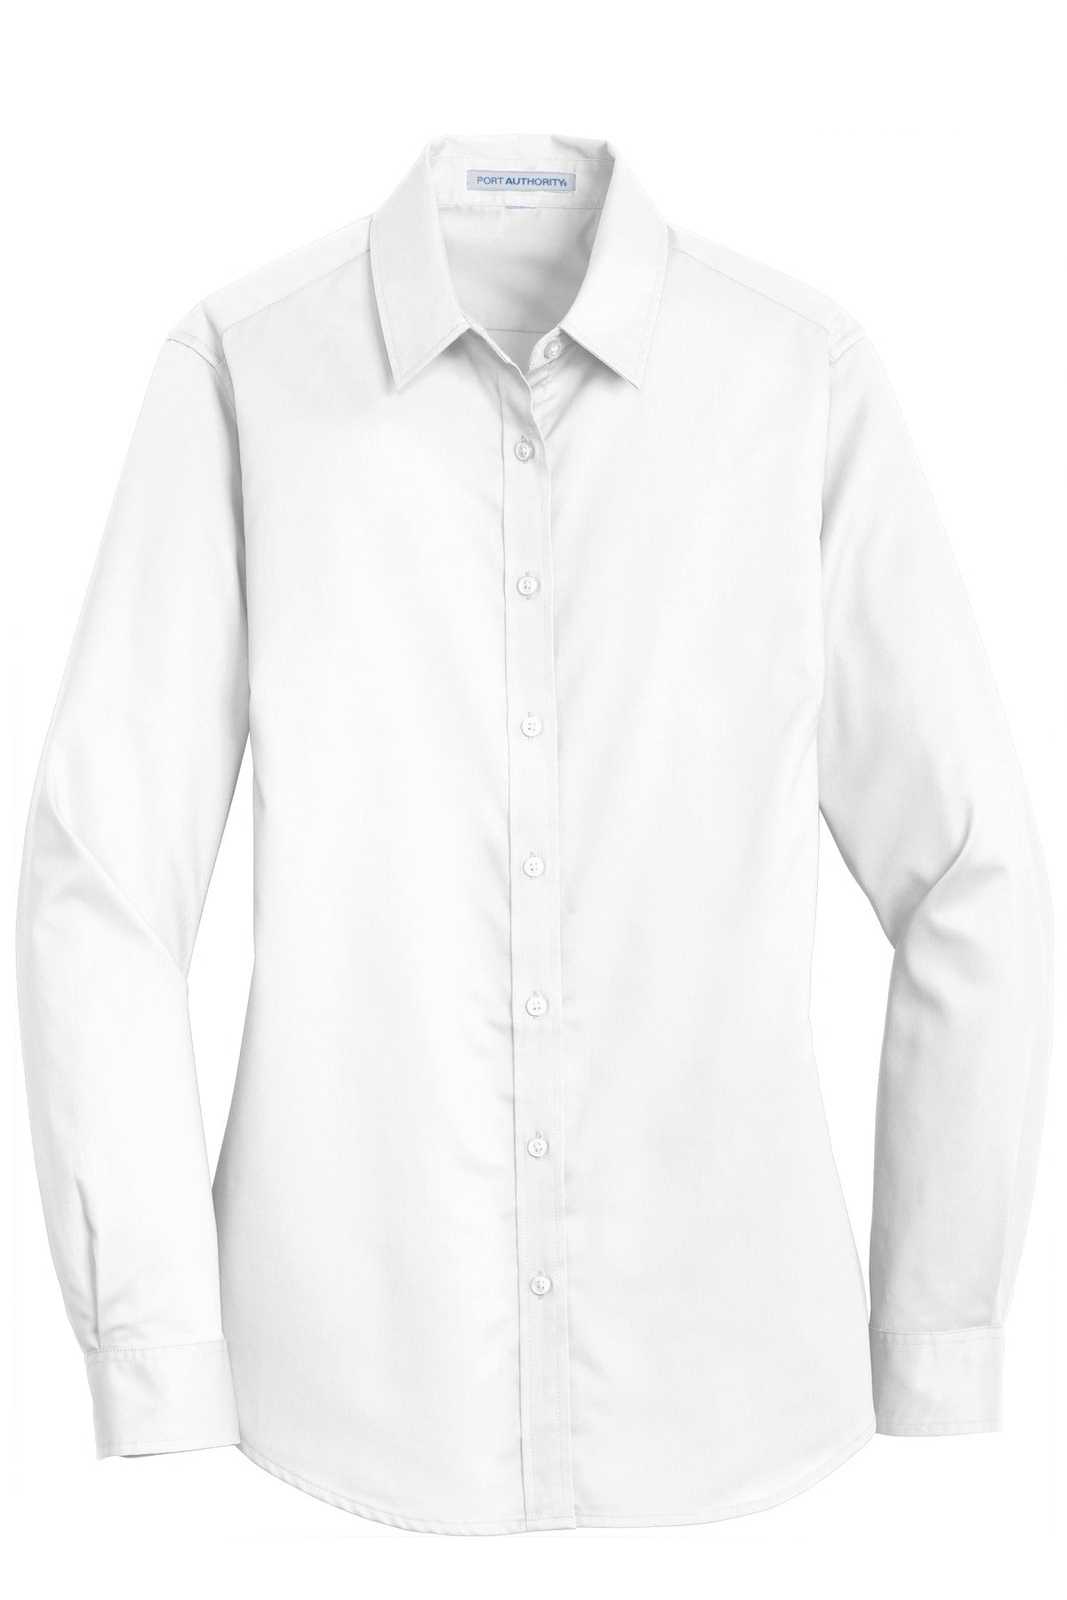 Port Authority L663 Ladies Superpro Twill Shirt - White - HIT a Double - 5